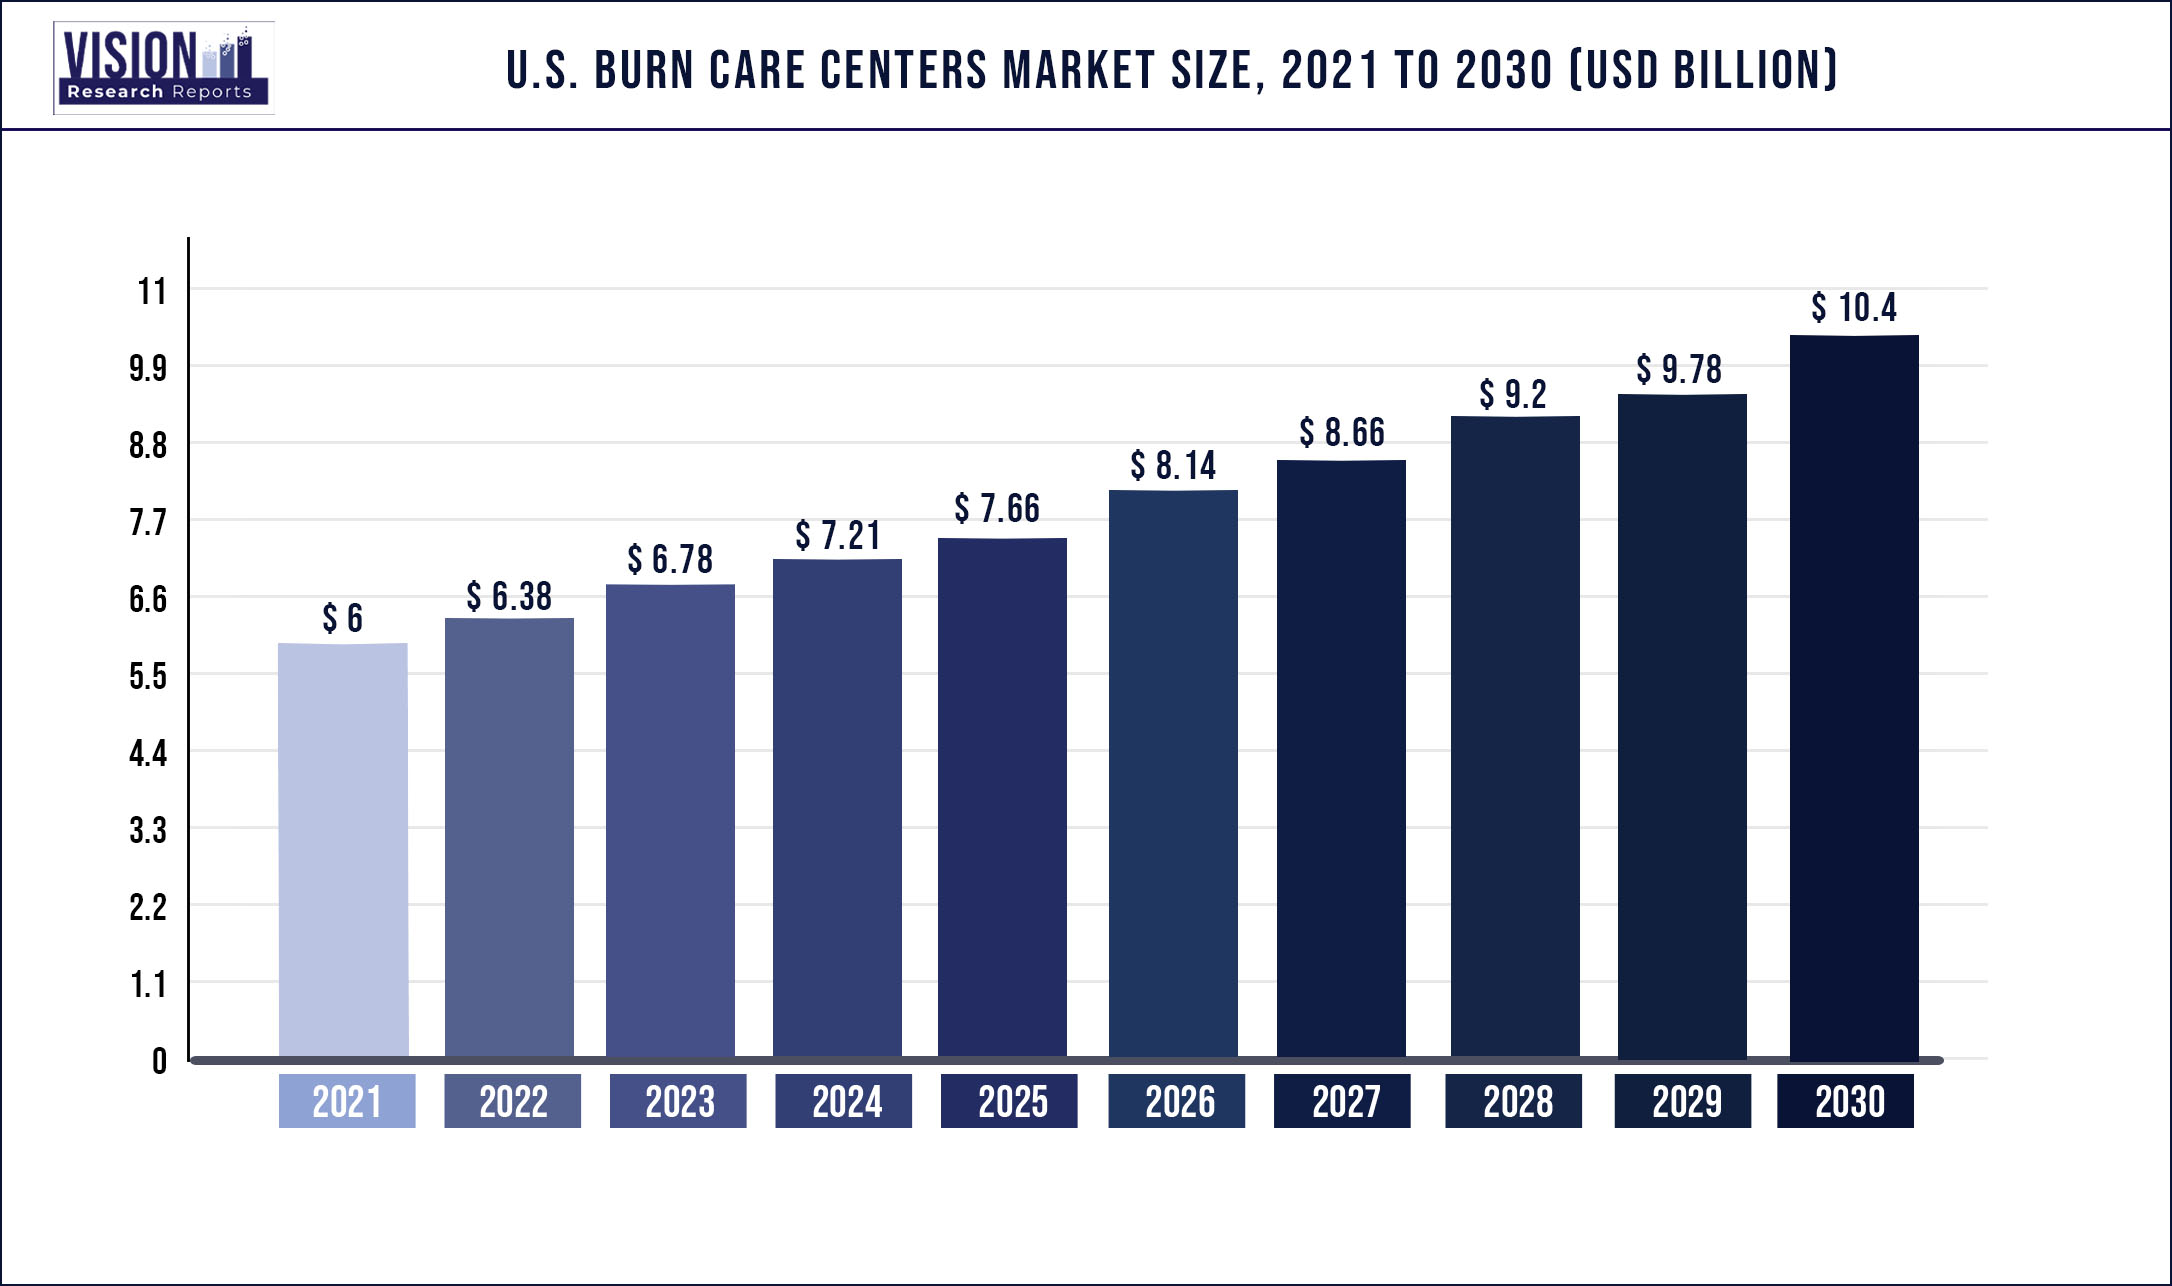 U.S. Burn Care Centers Market Size 2021 to 2030